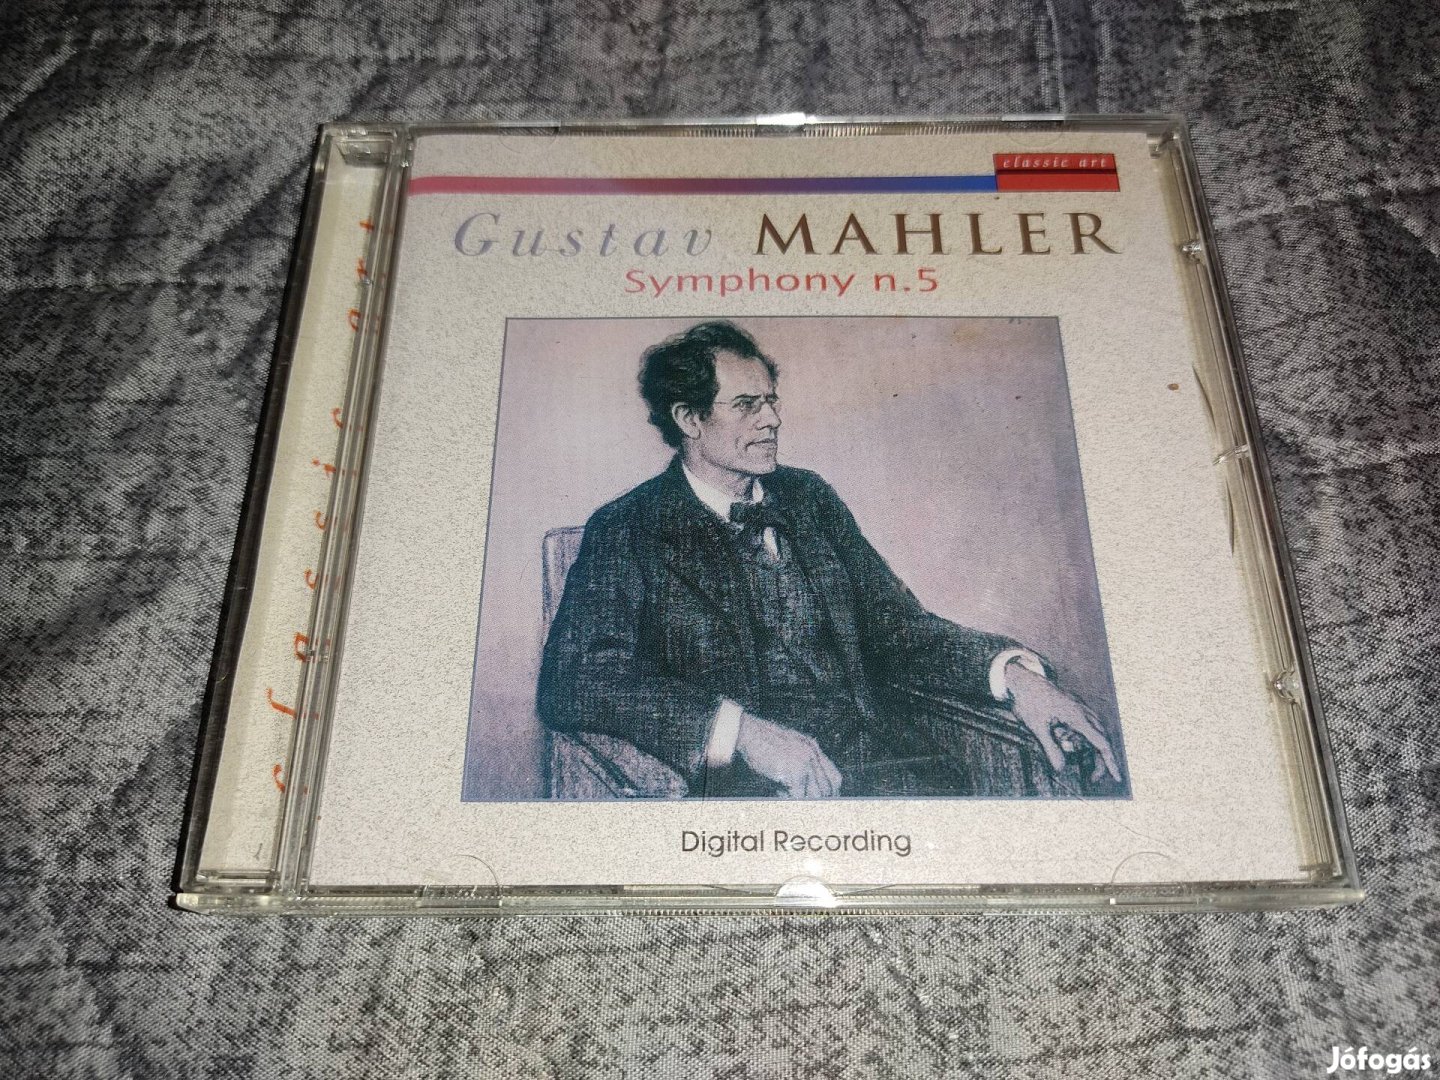 Gustav Mahler - Symphony No.5 CD